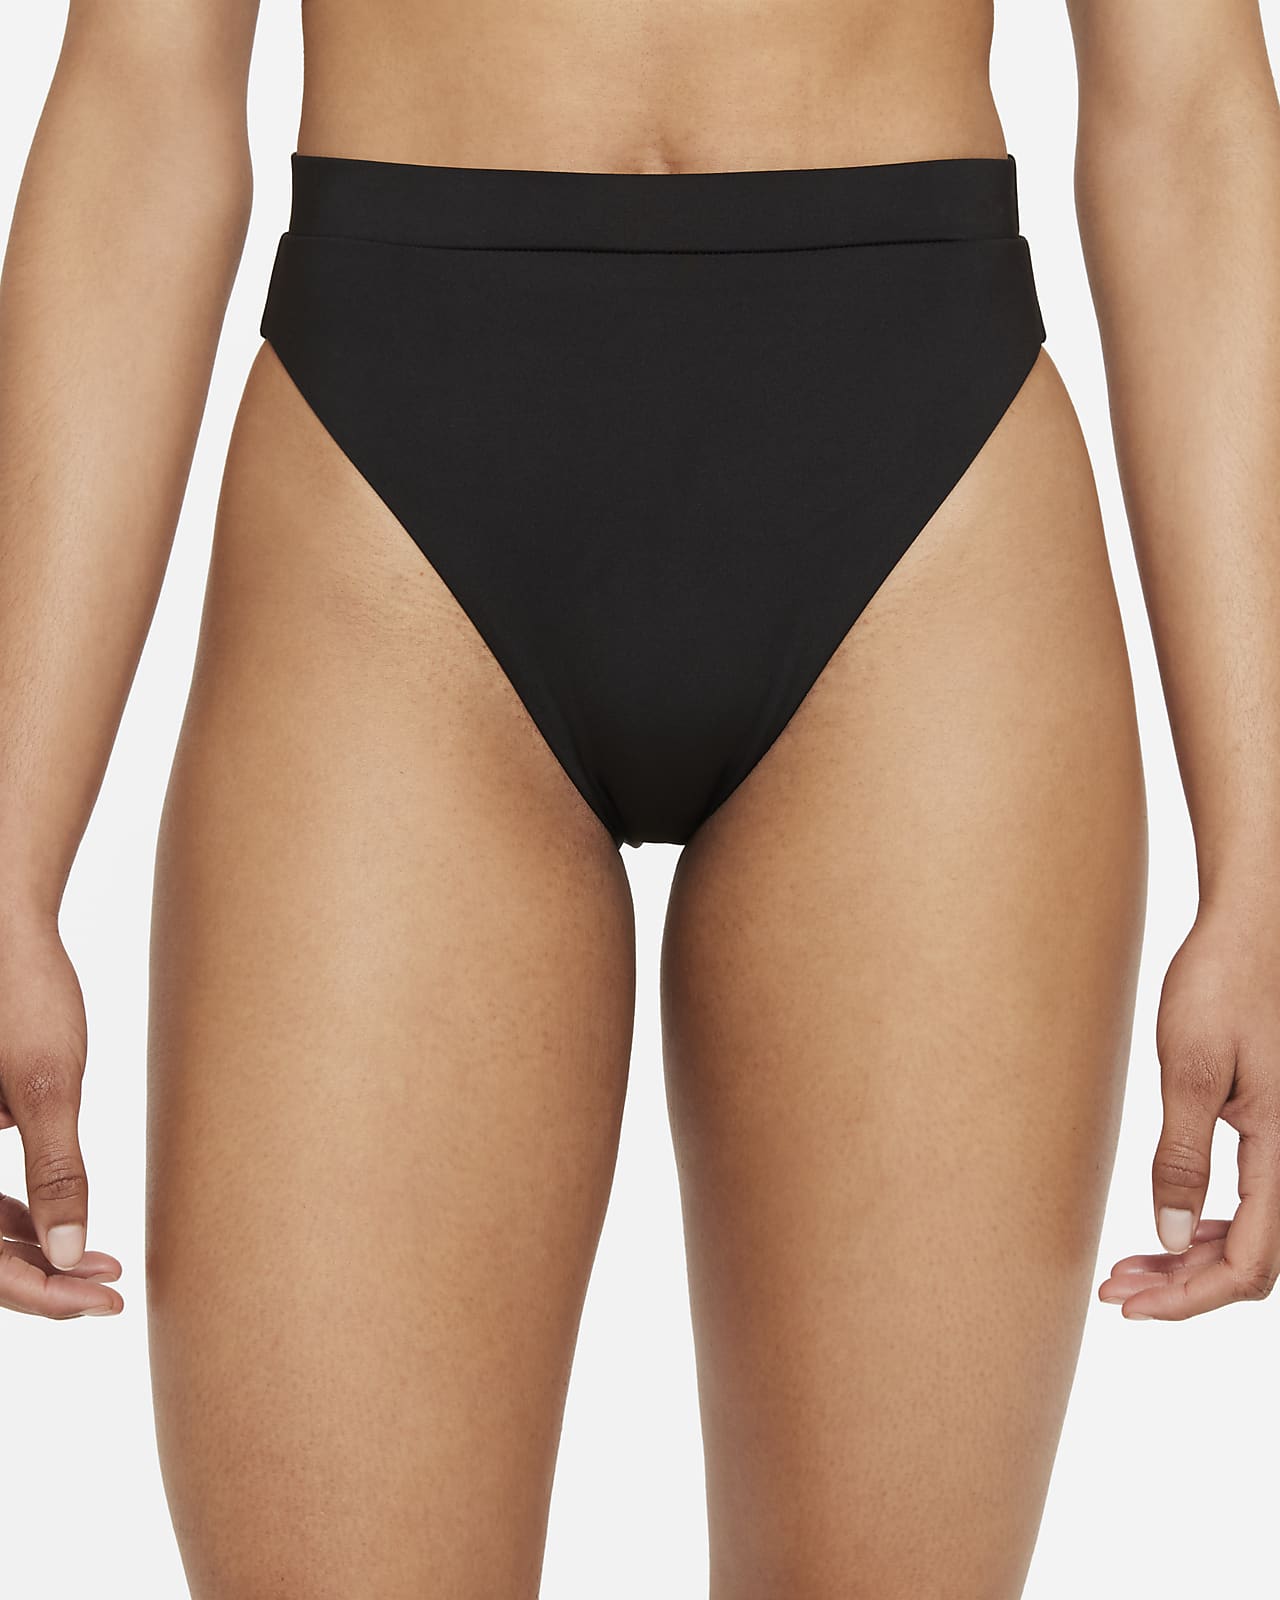 Nike Swim Women's Cut-Out High-Waisted Bikini Bottoms. Nike LU